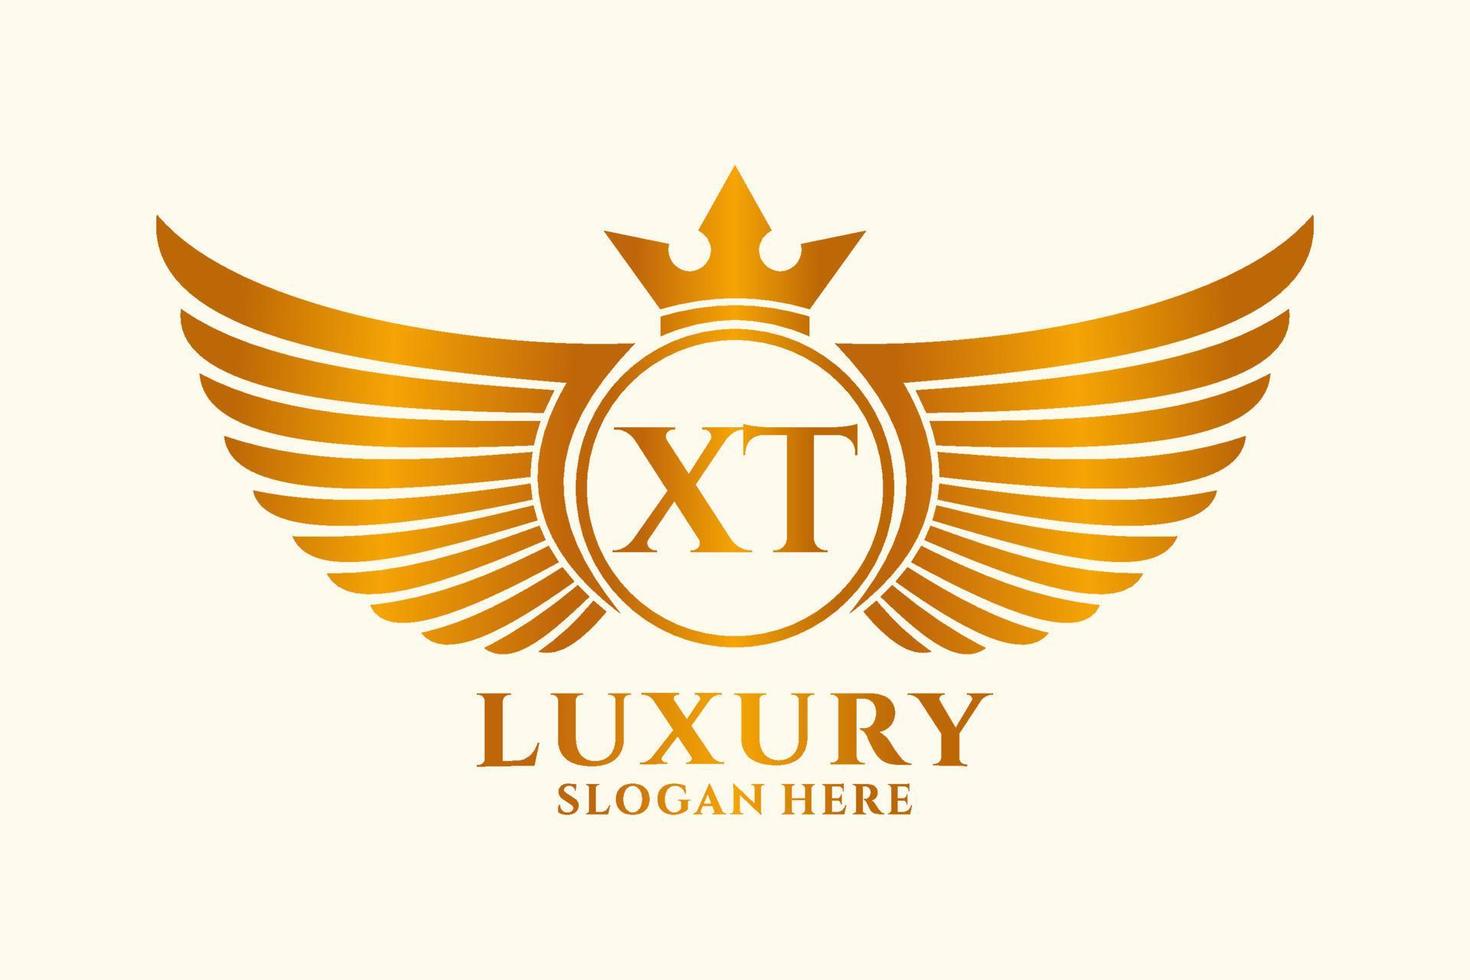 luxe Koninklijk vleugel brief xt kam goud kleur logo vector, zege logo, kam logo, vleugel logo, vector logo sjabloon.